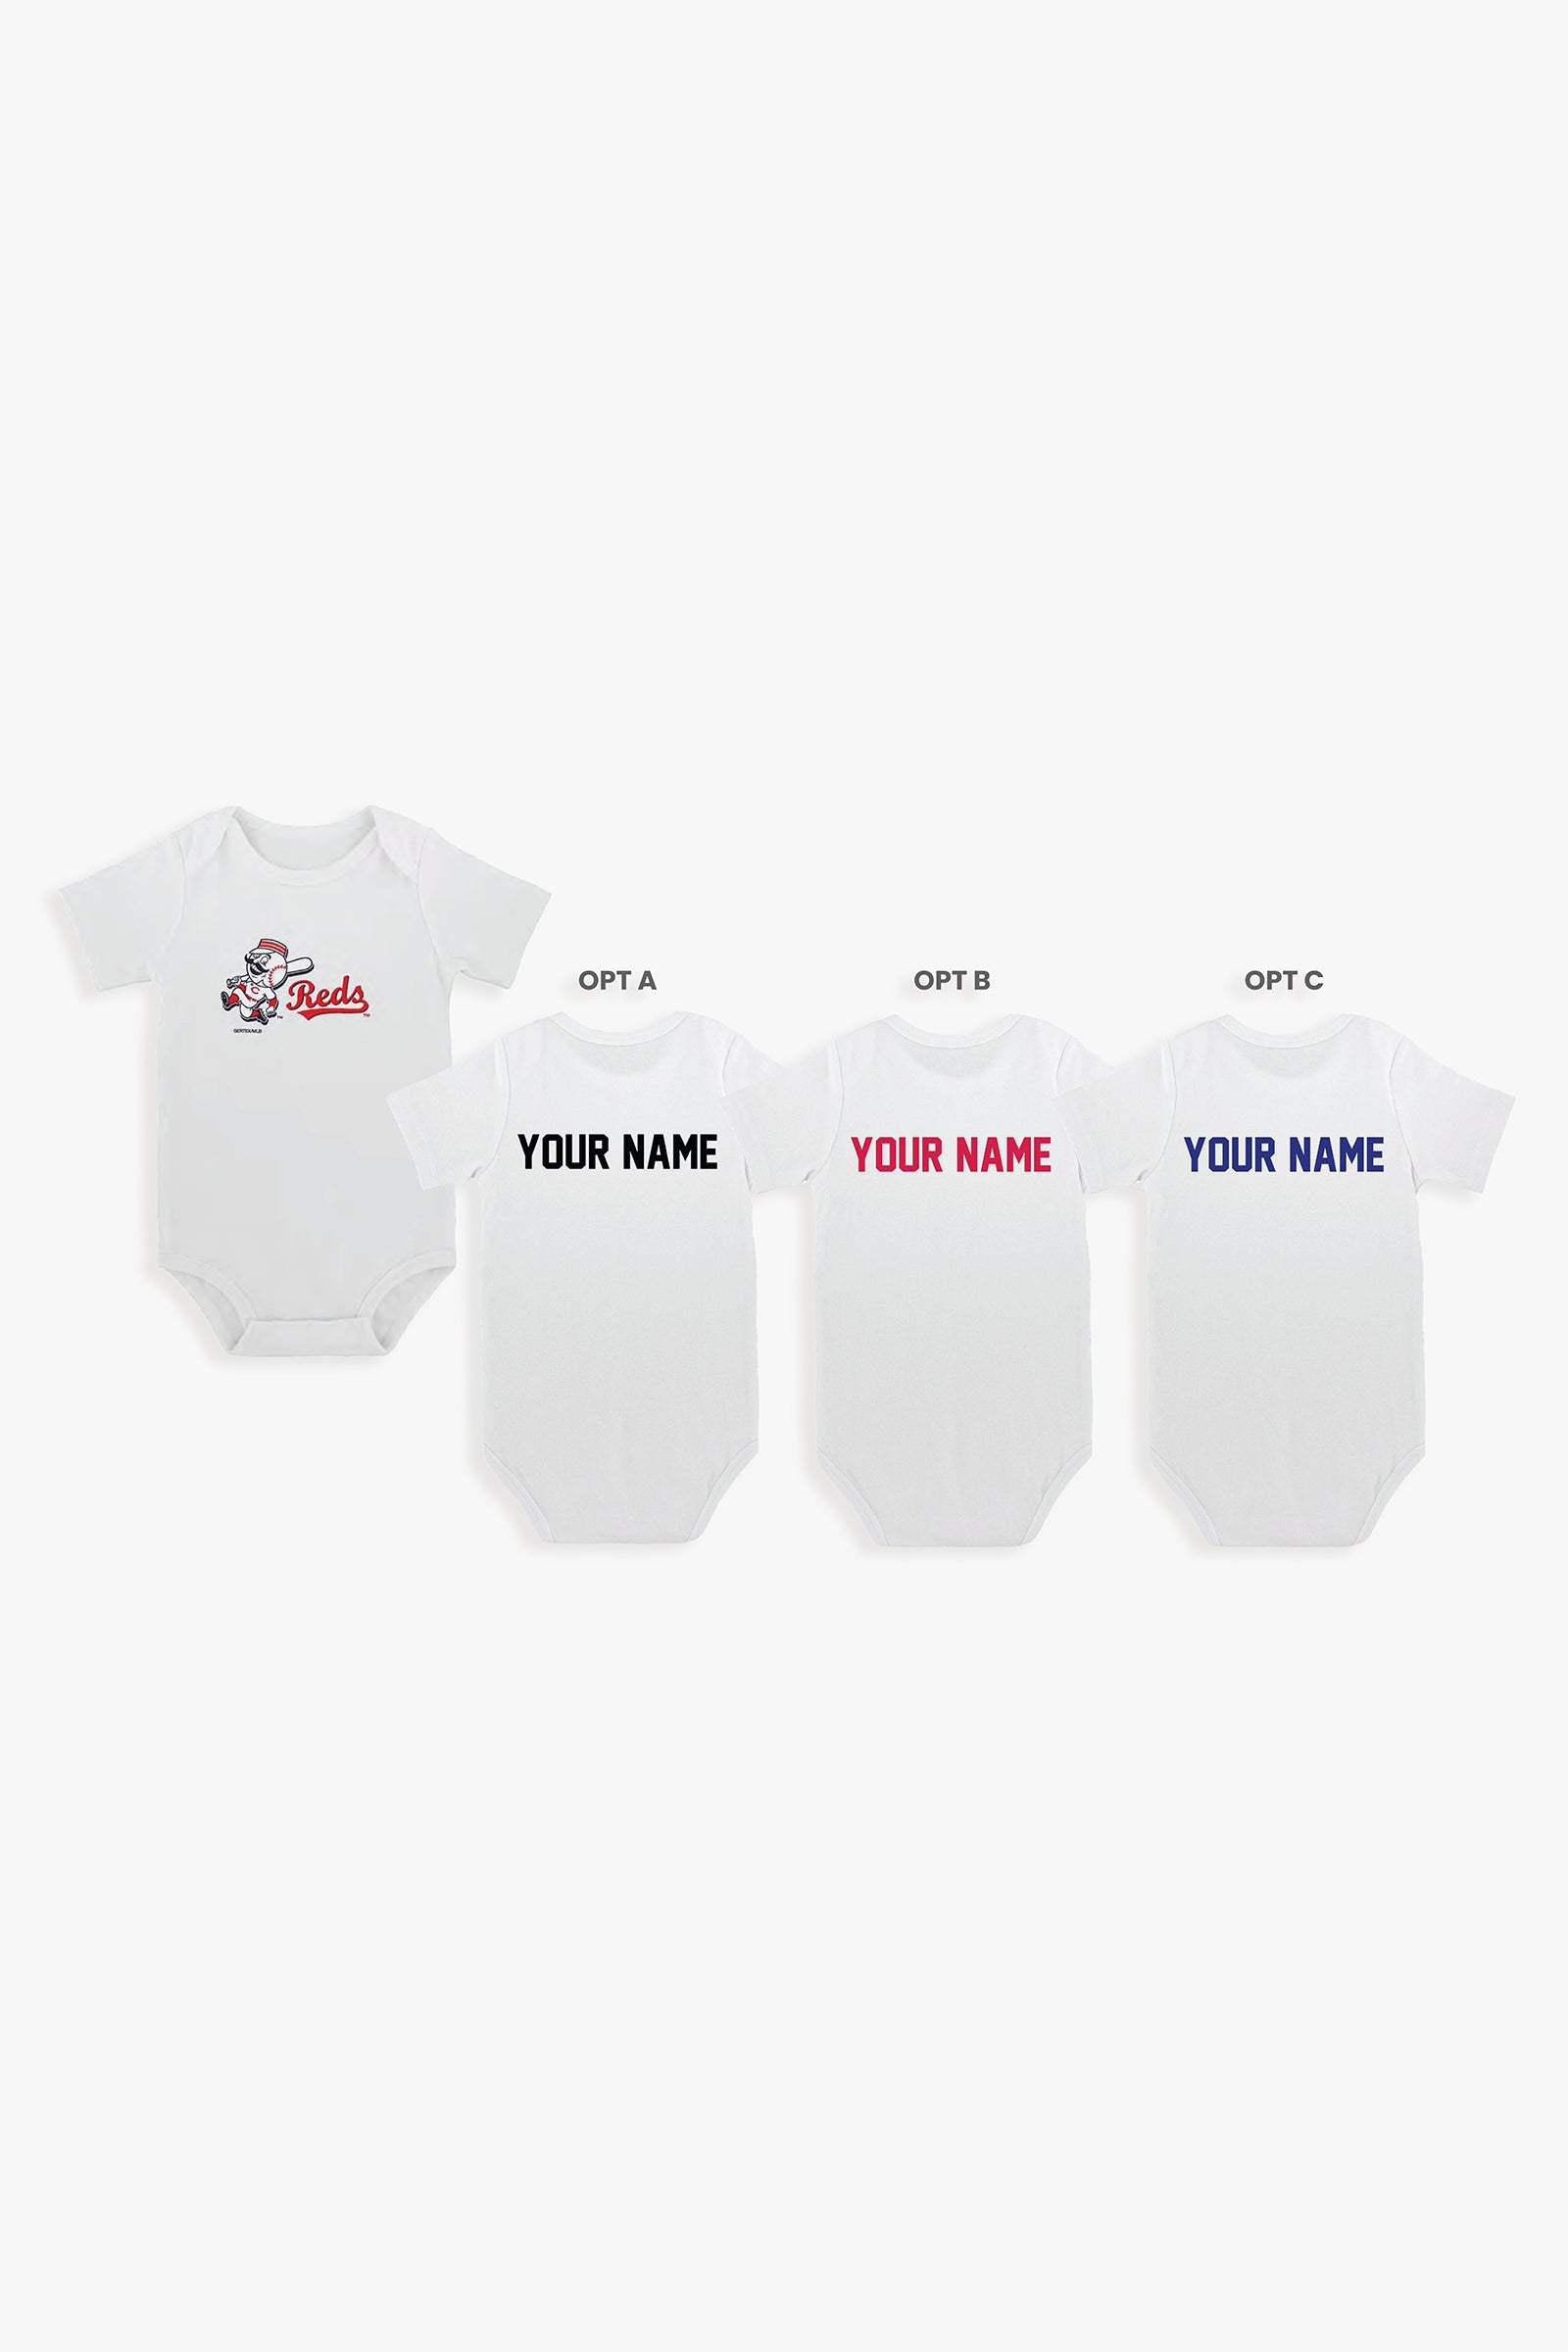 Customizable MLB Baby Bodysuit in White (9-12 Months)